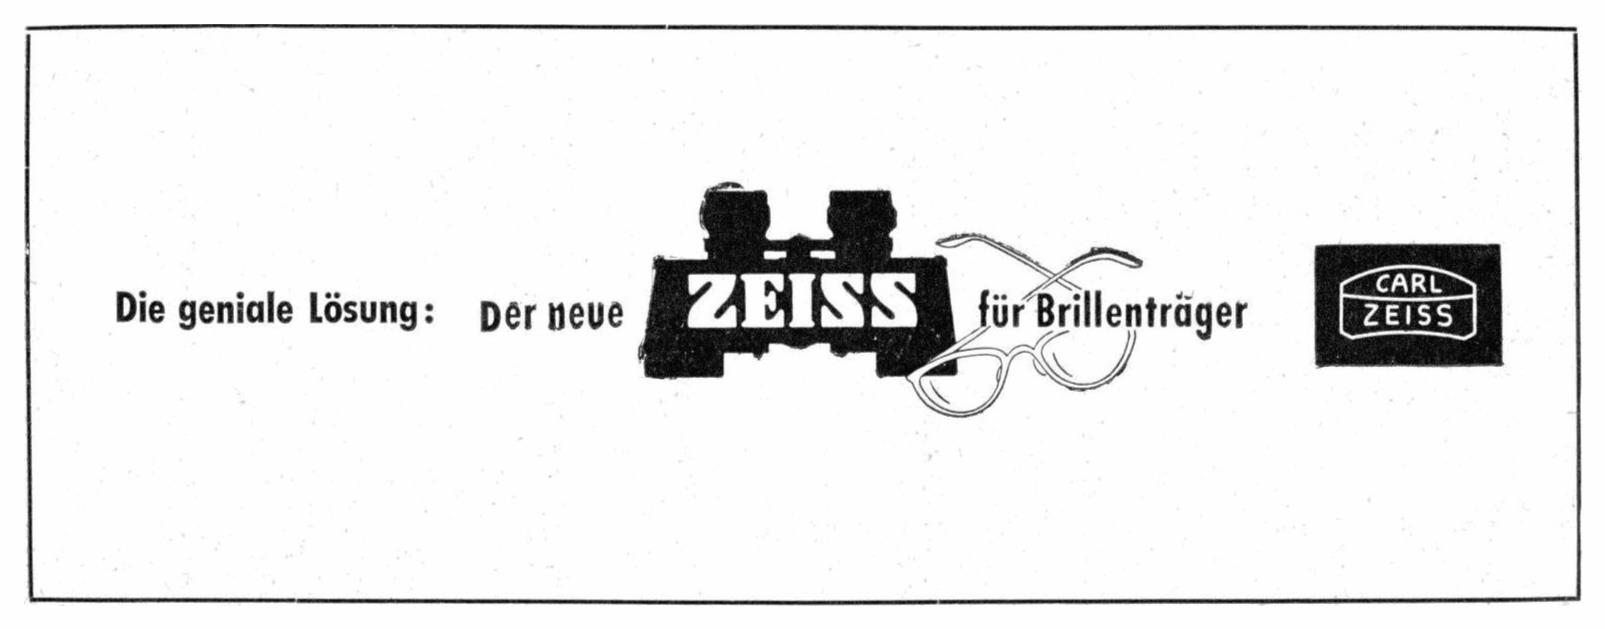 Zeiss 1959 01.jpg